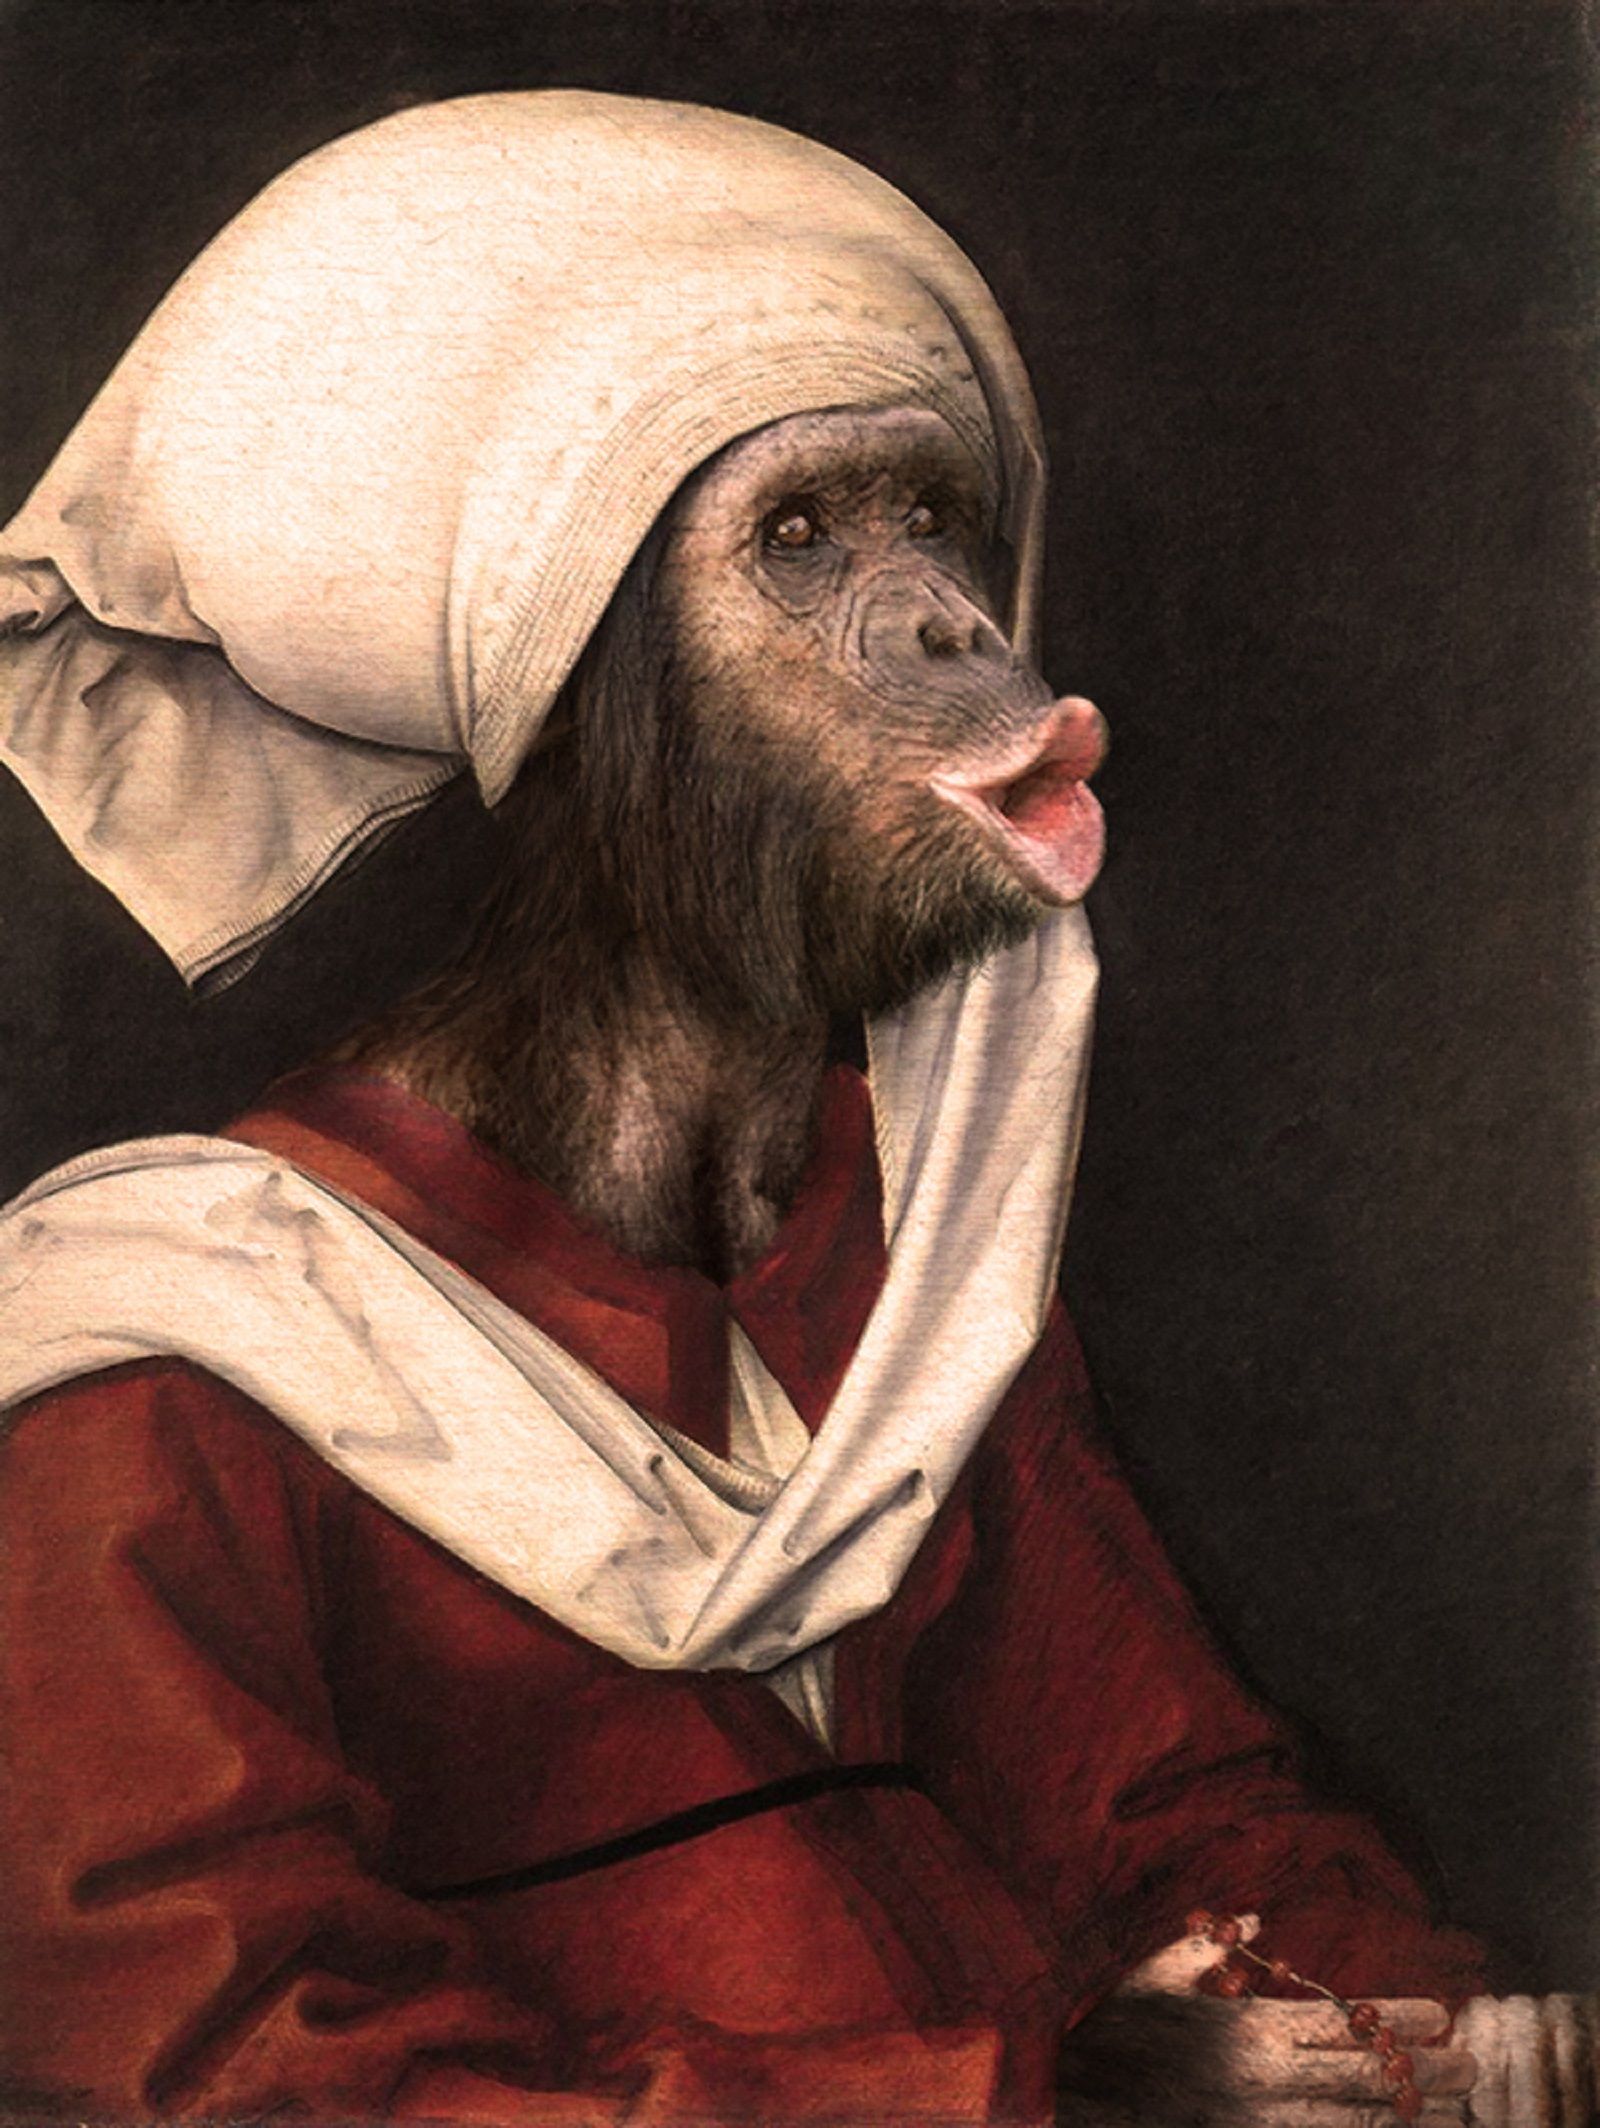 Amusing Images Of Animals Photoshopped Into Renaissance Paintings image 6